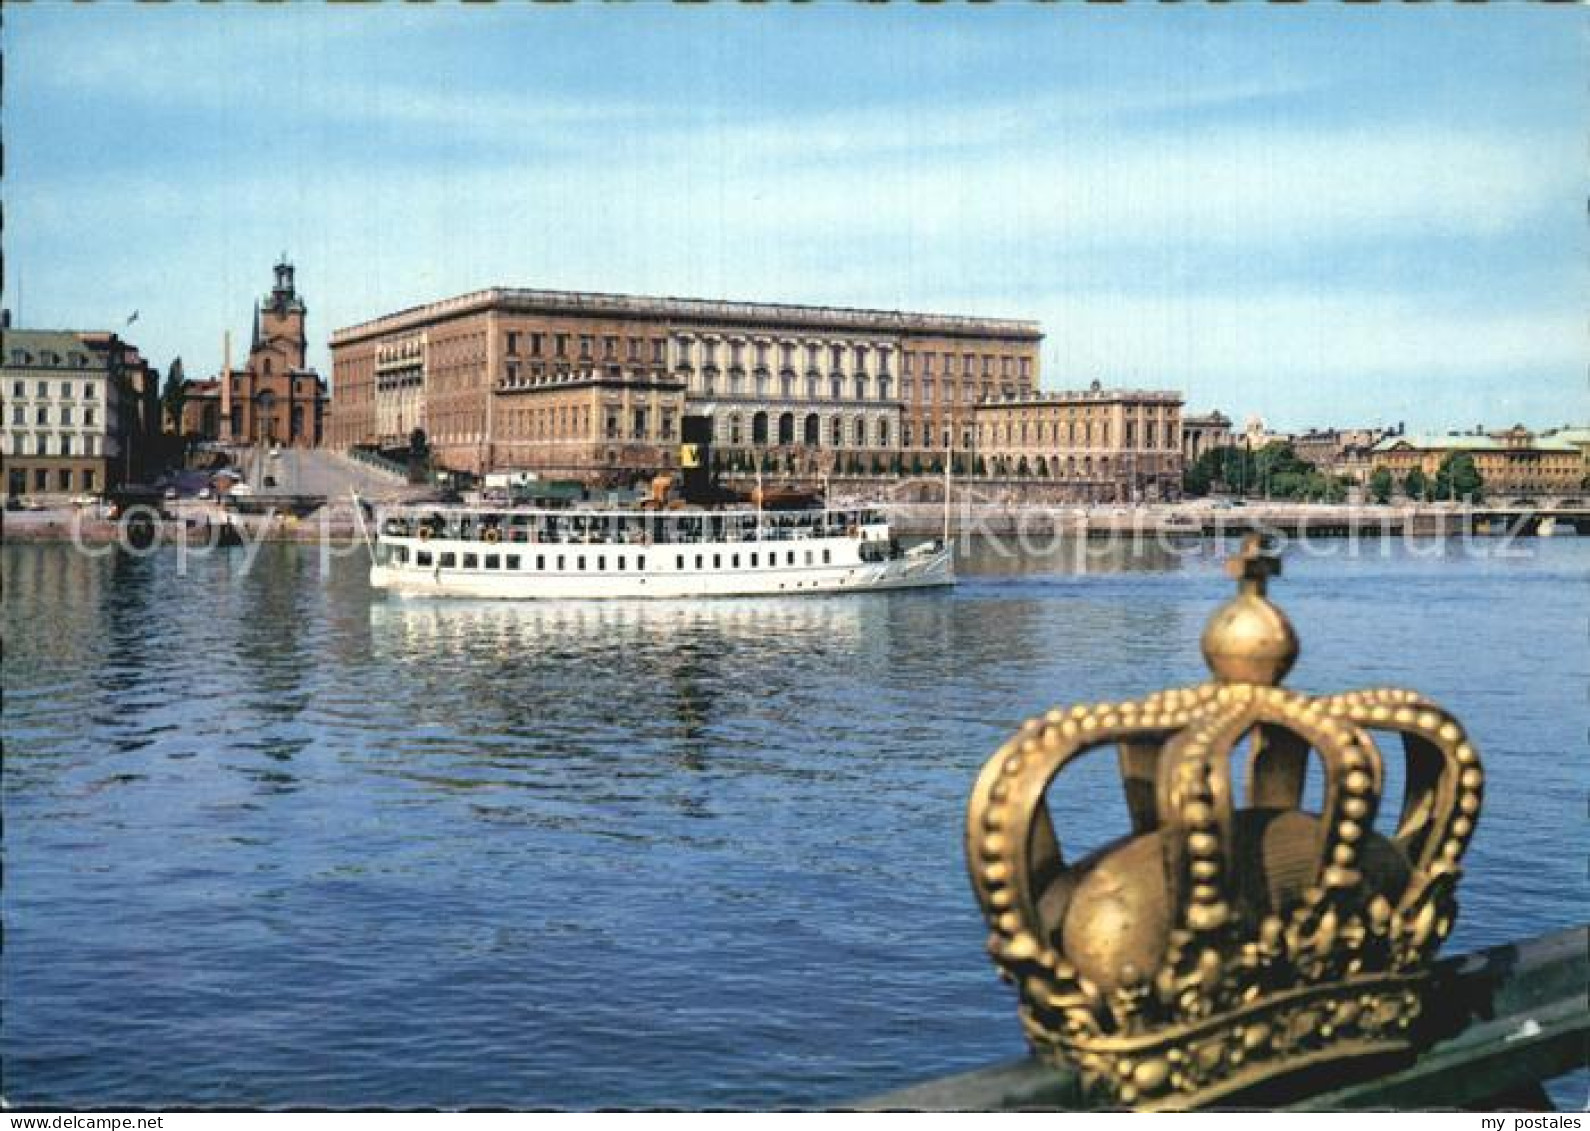 72543239 Stockholm The Royal Palace Stockholm - Suède